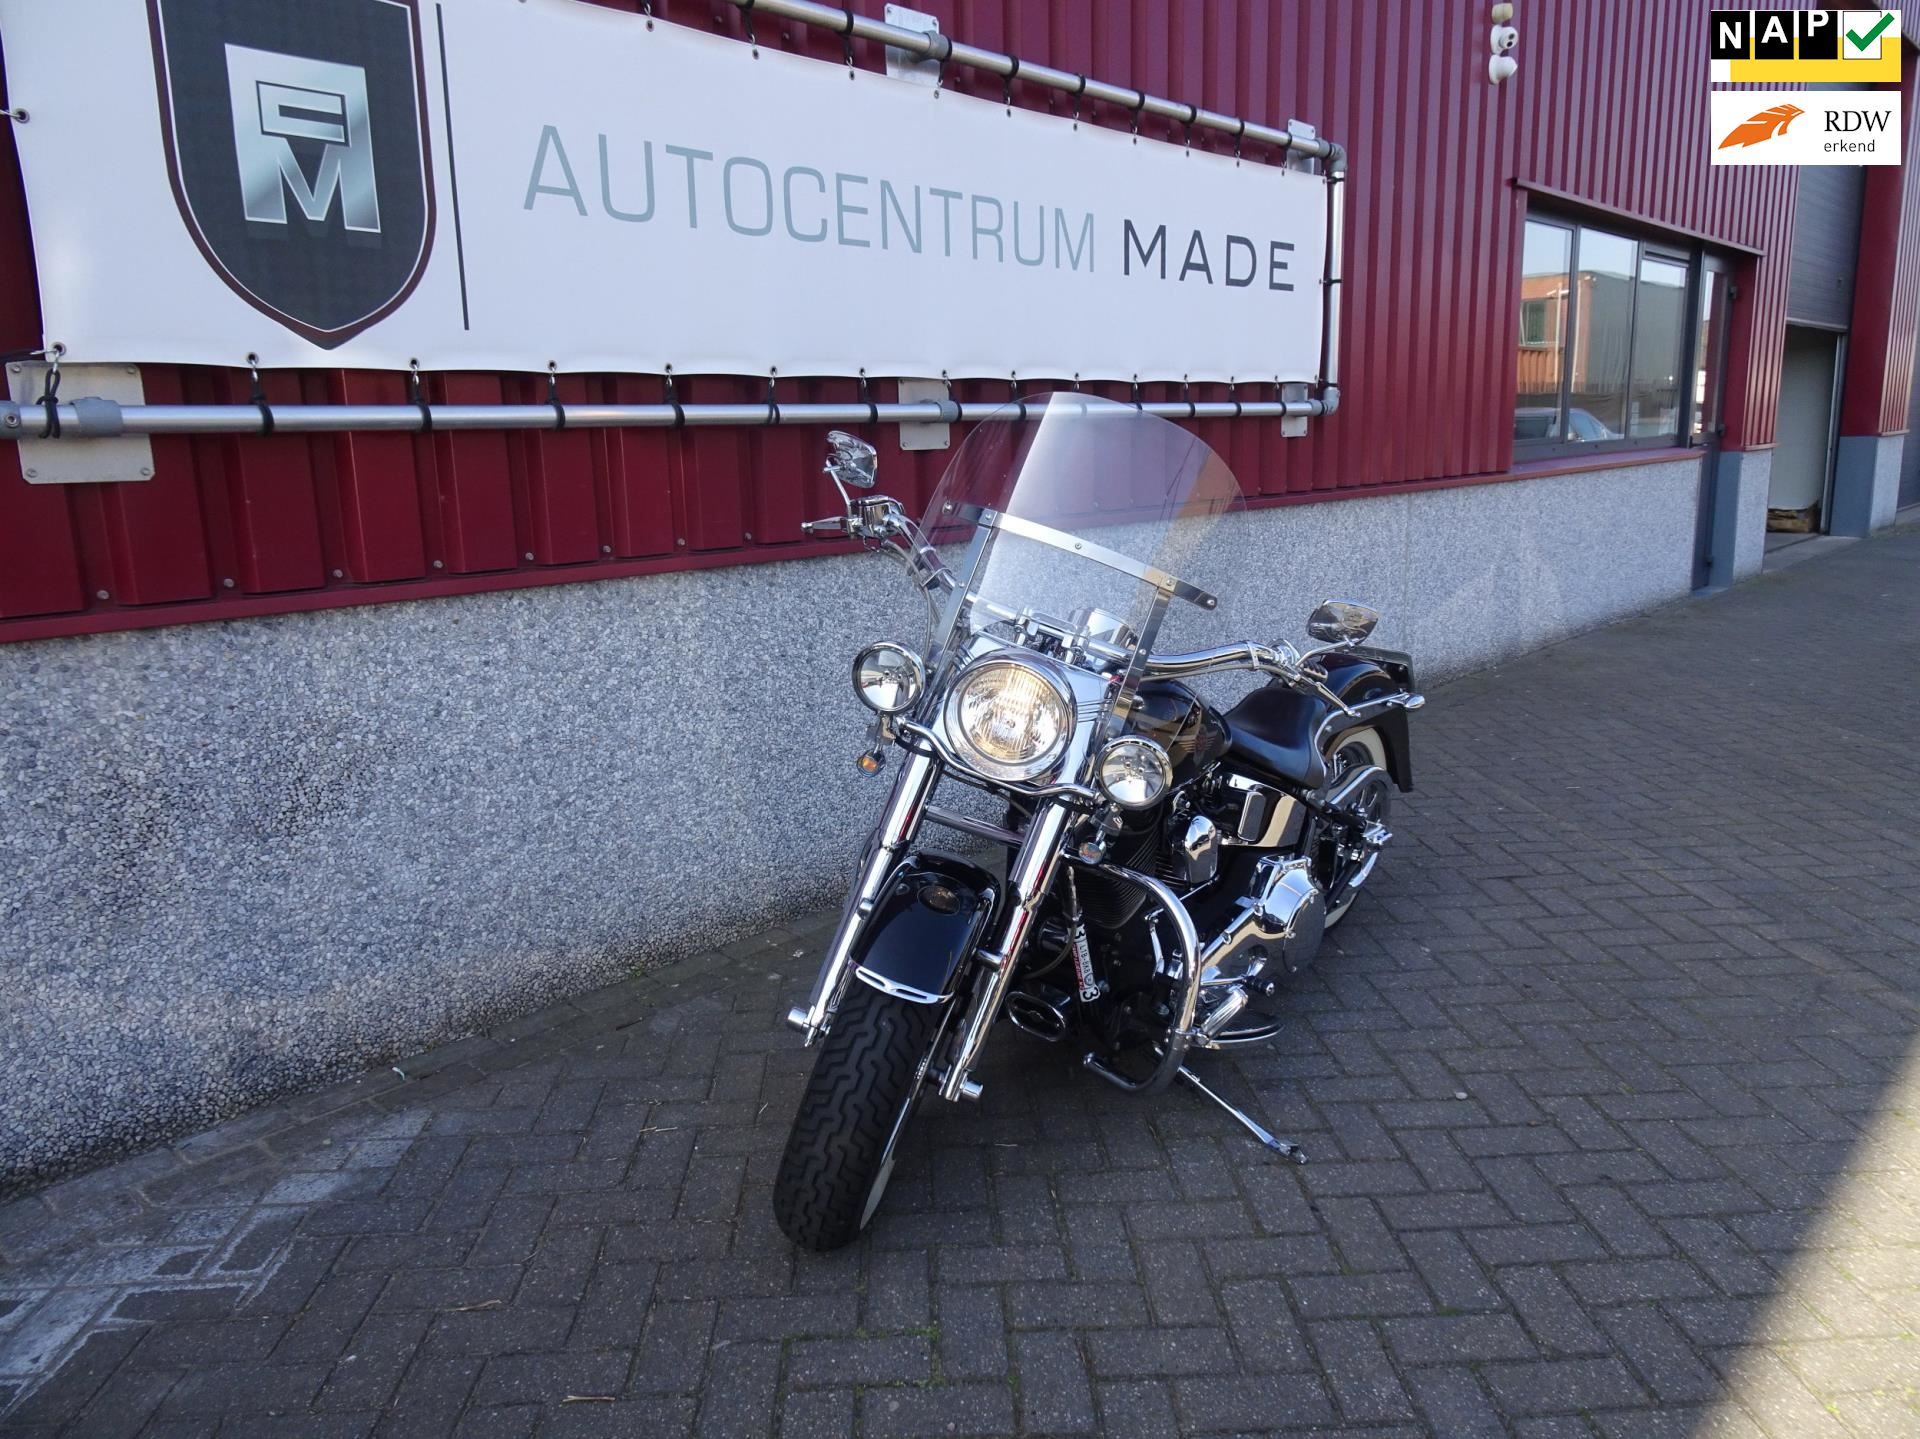 Harley Davidson Chopper occasion - Auto Centrum Made